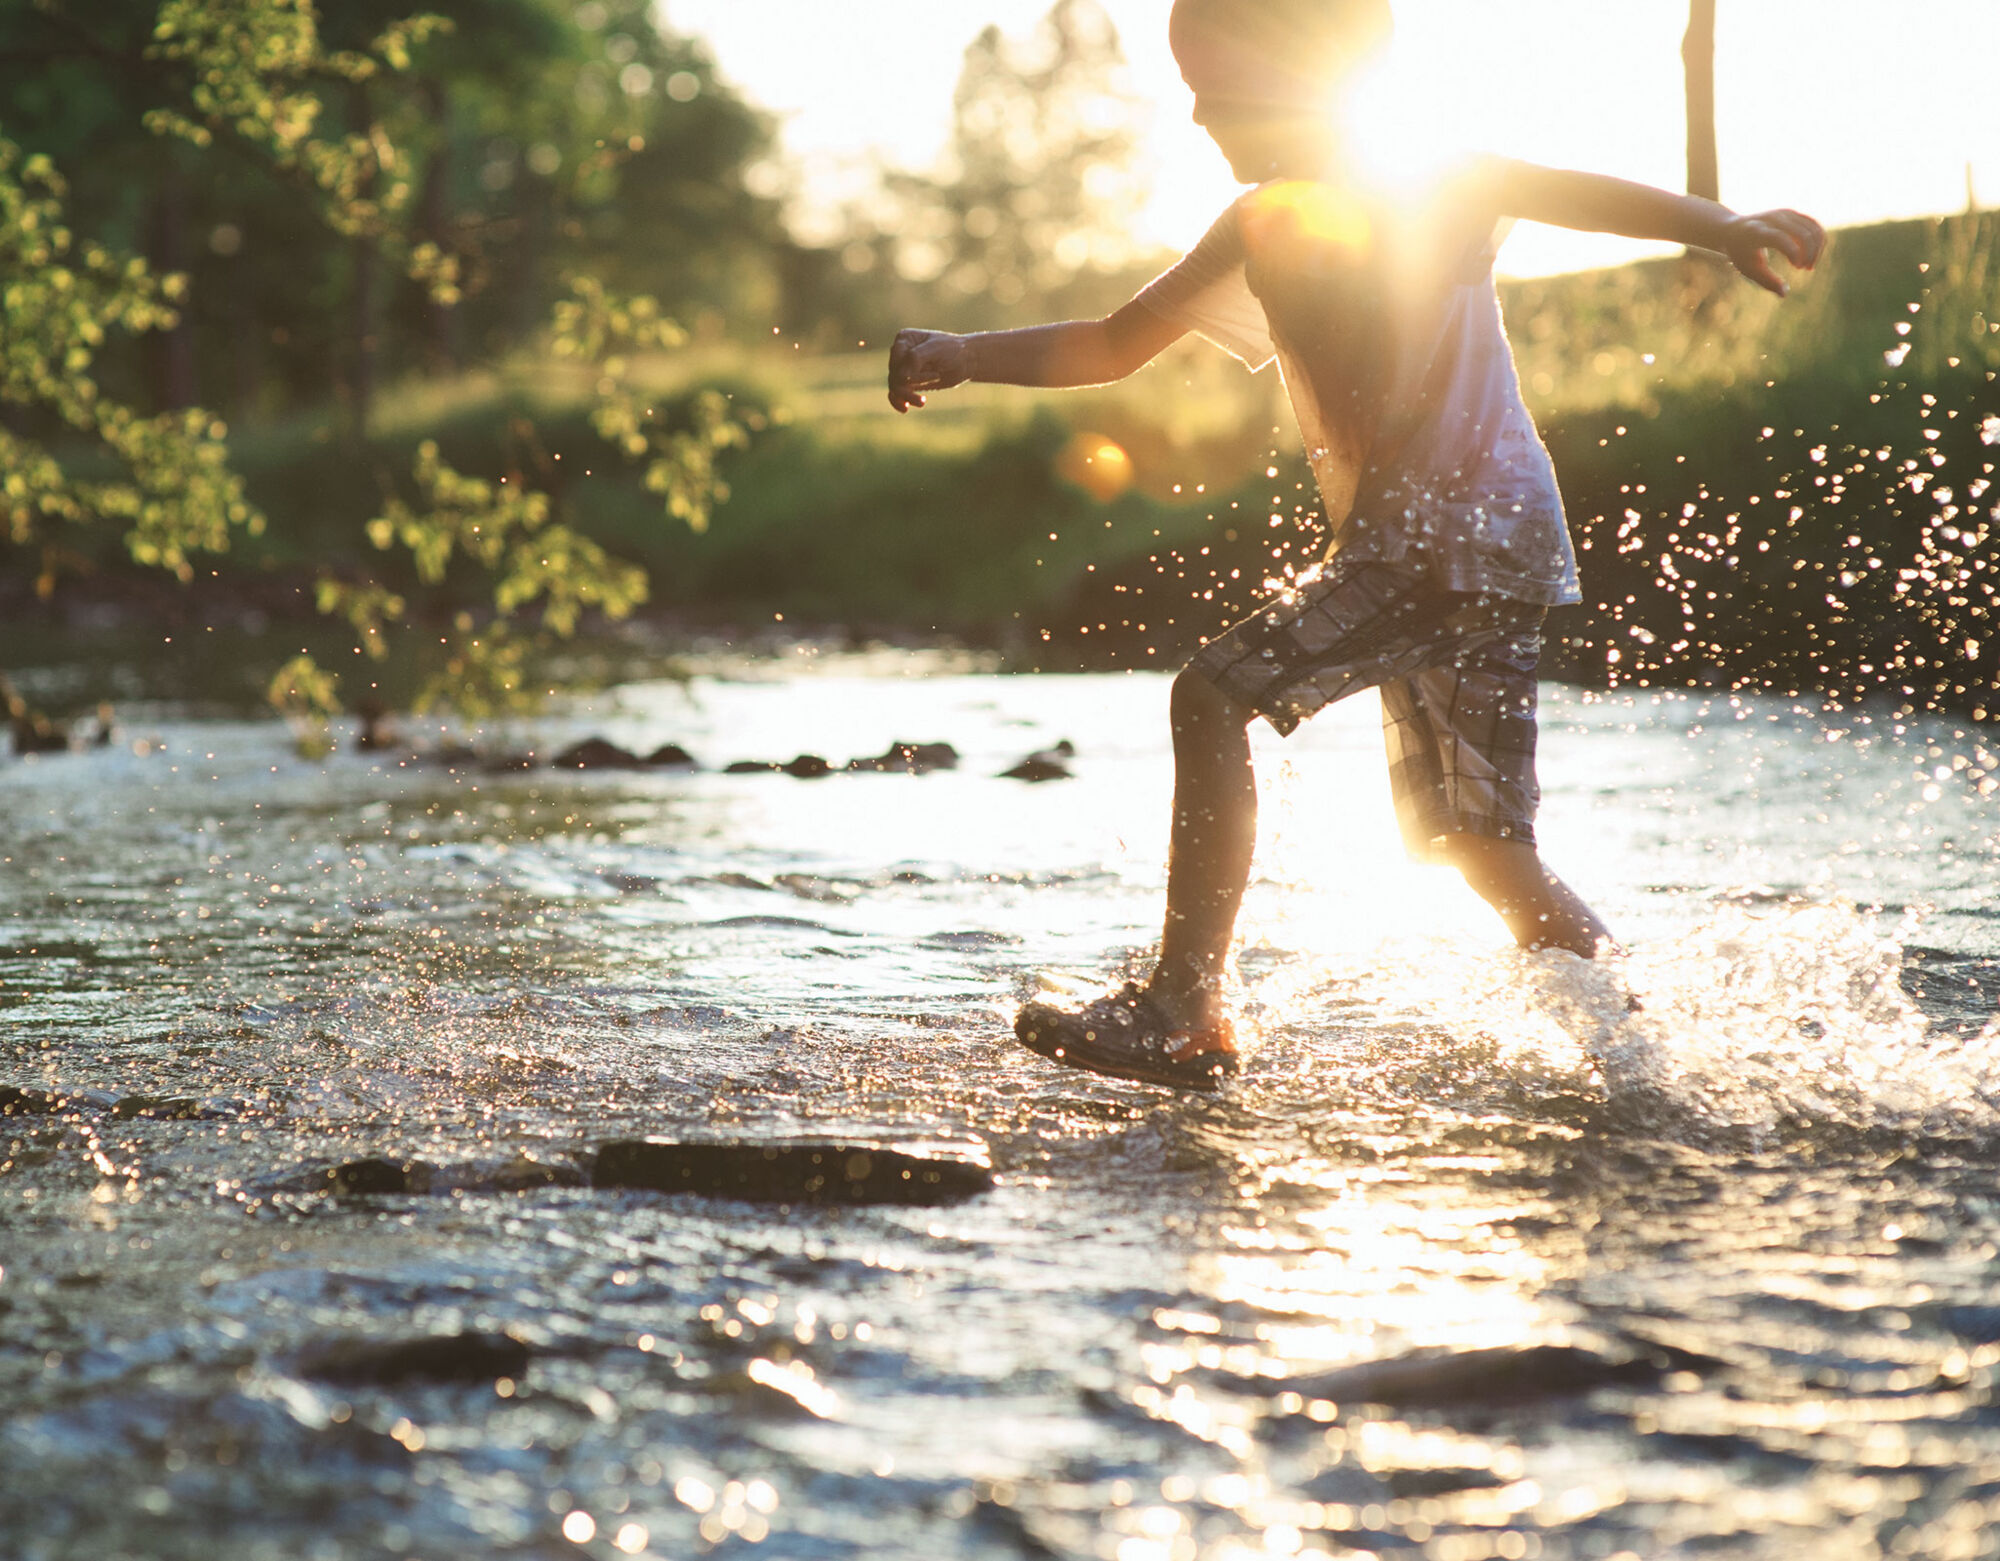 A child runs through a shallow body of water.